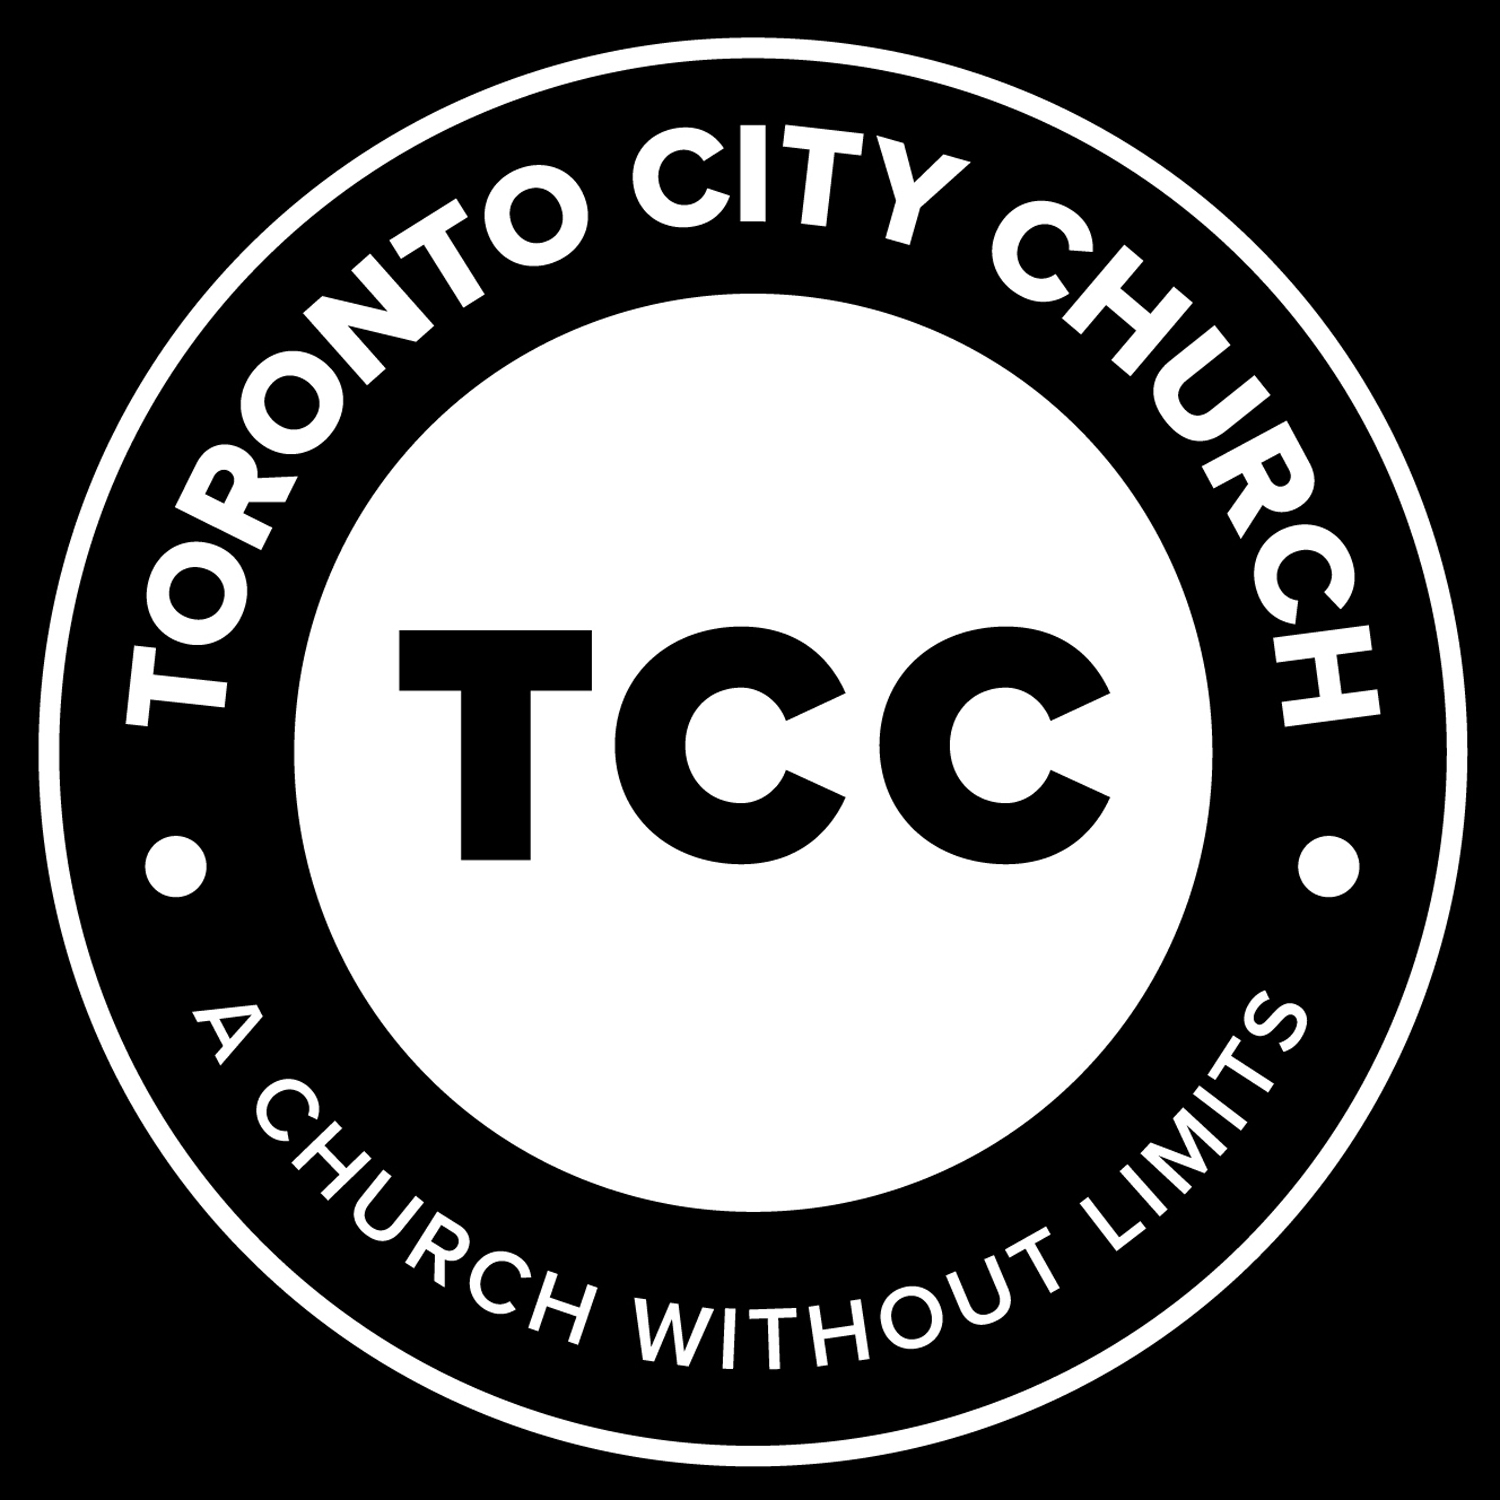 Toronto City Church